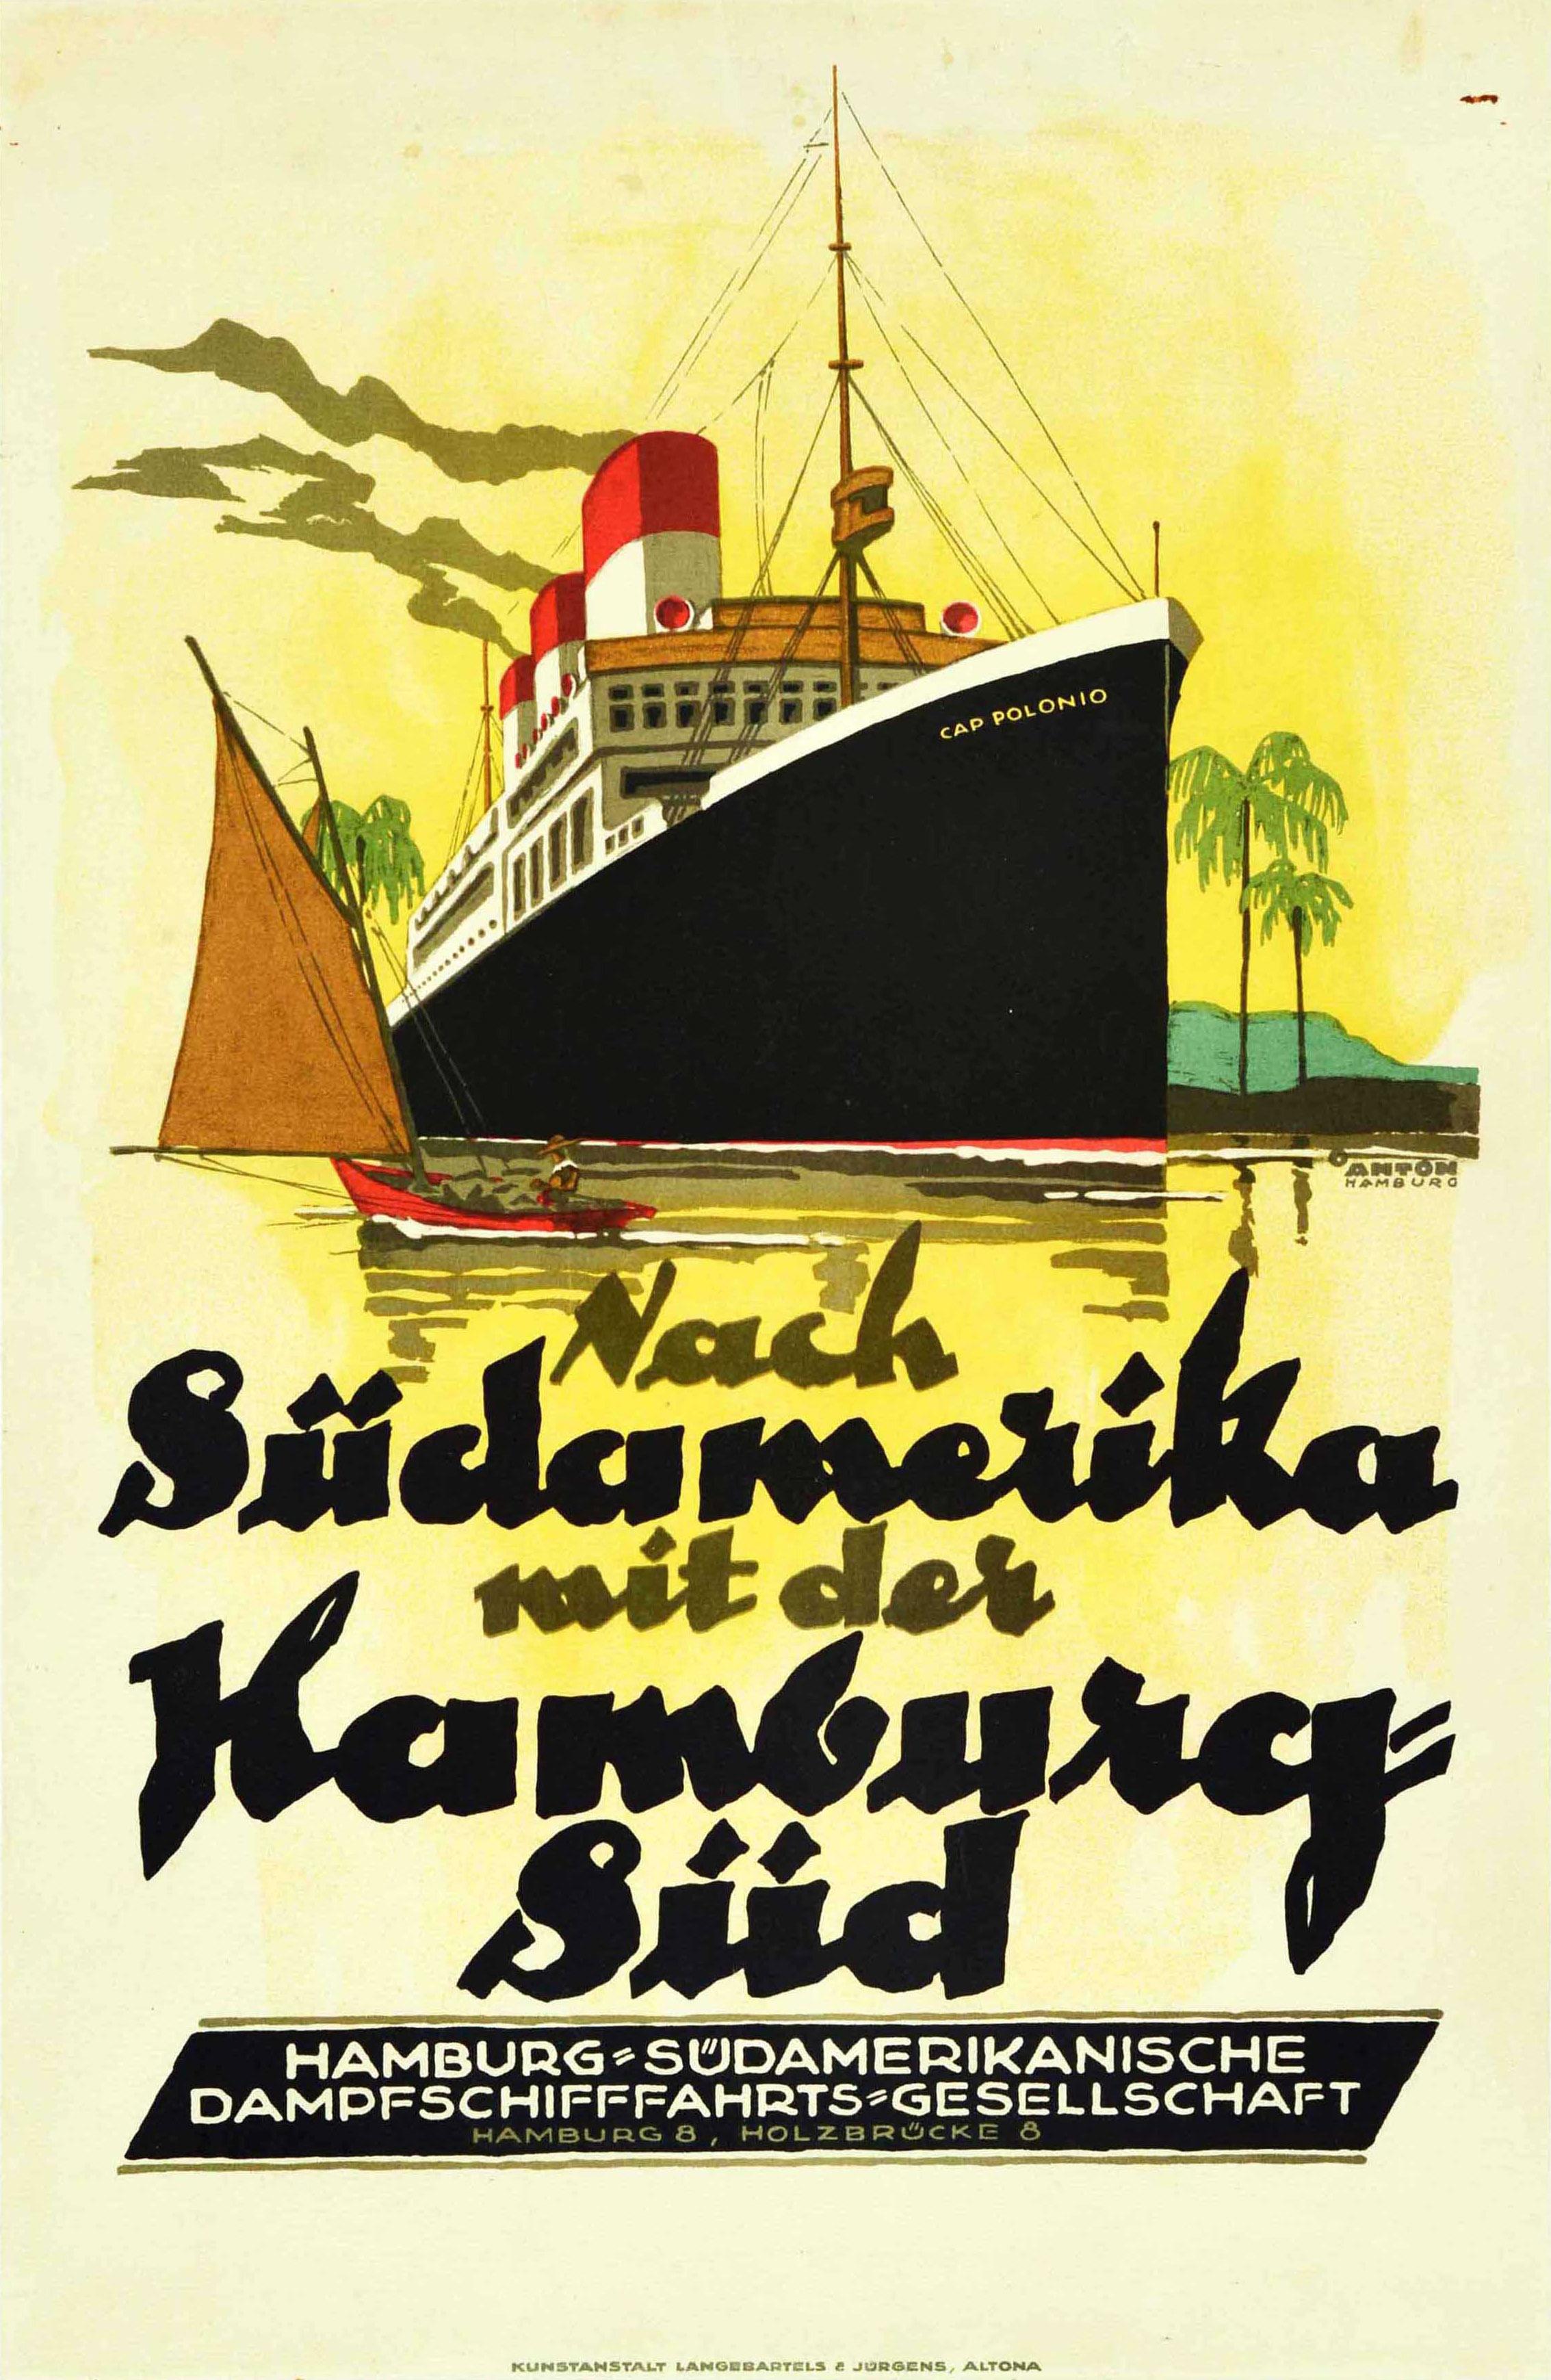 Ottomar Anton Print - Original Vintage Poster Sudamerika S America Hamburg Sud Cruise Ship Cap Polonio